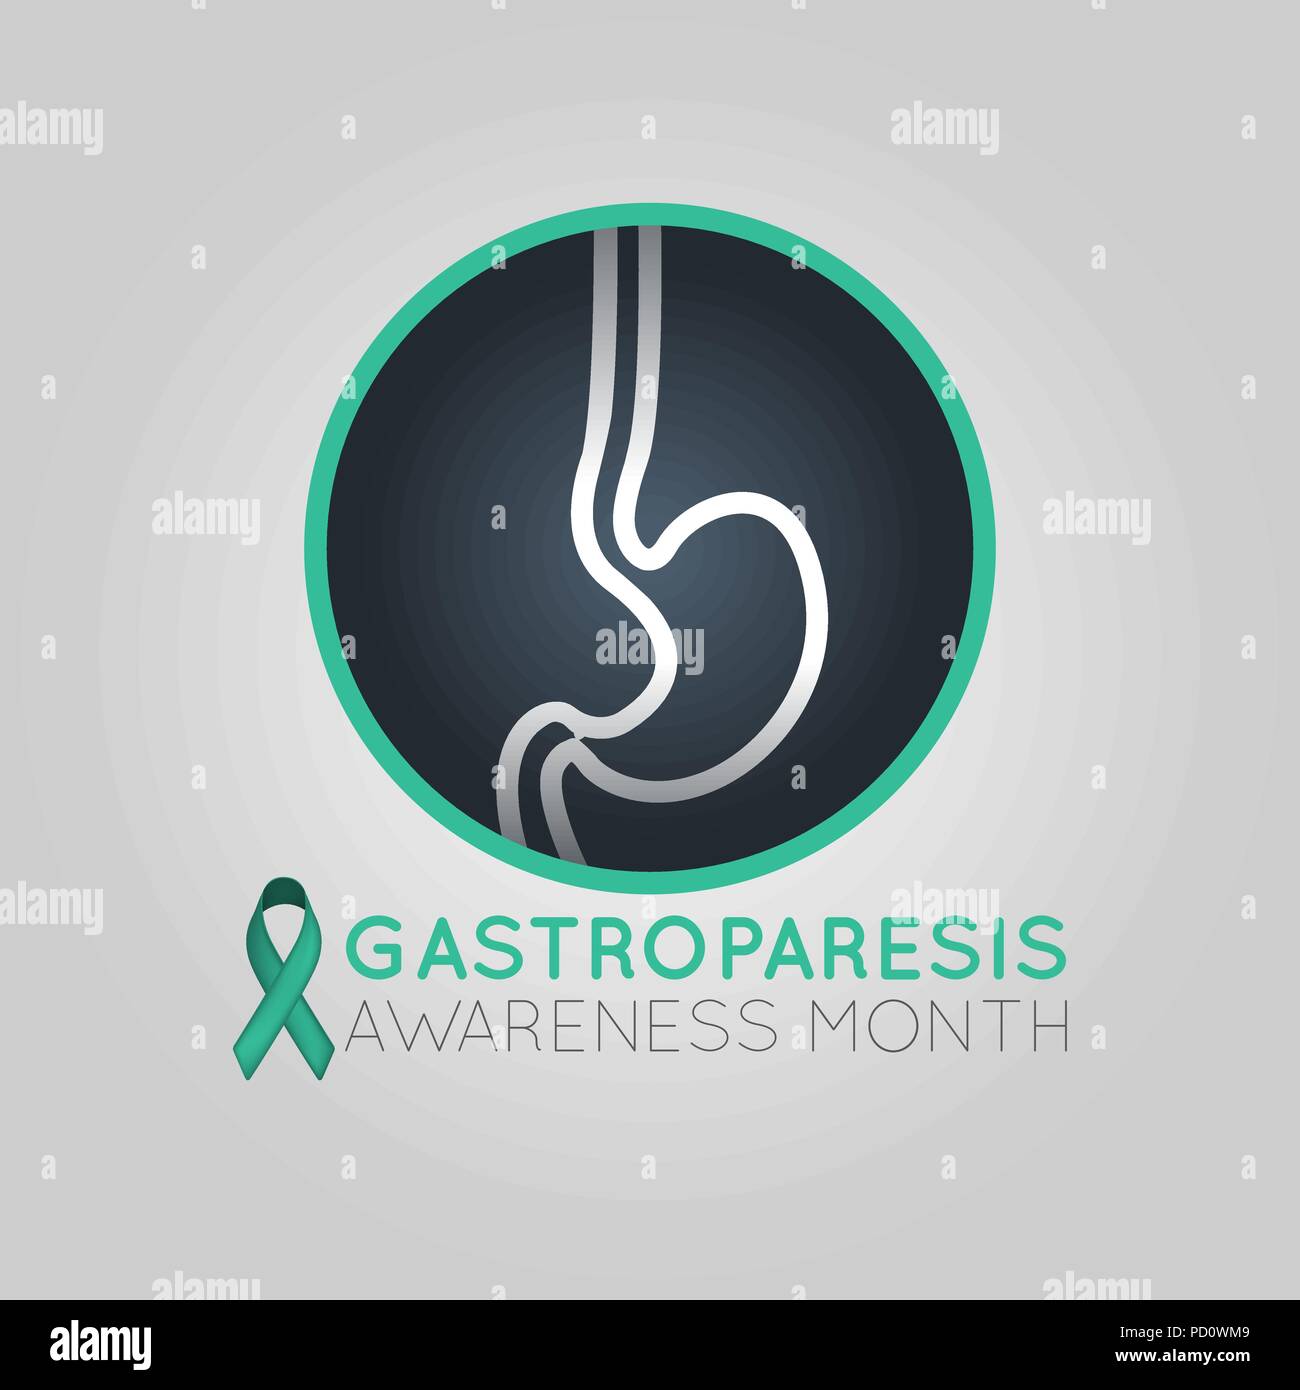 Gastroparesis Awareness Month vector logo icon illustration Stock Vector